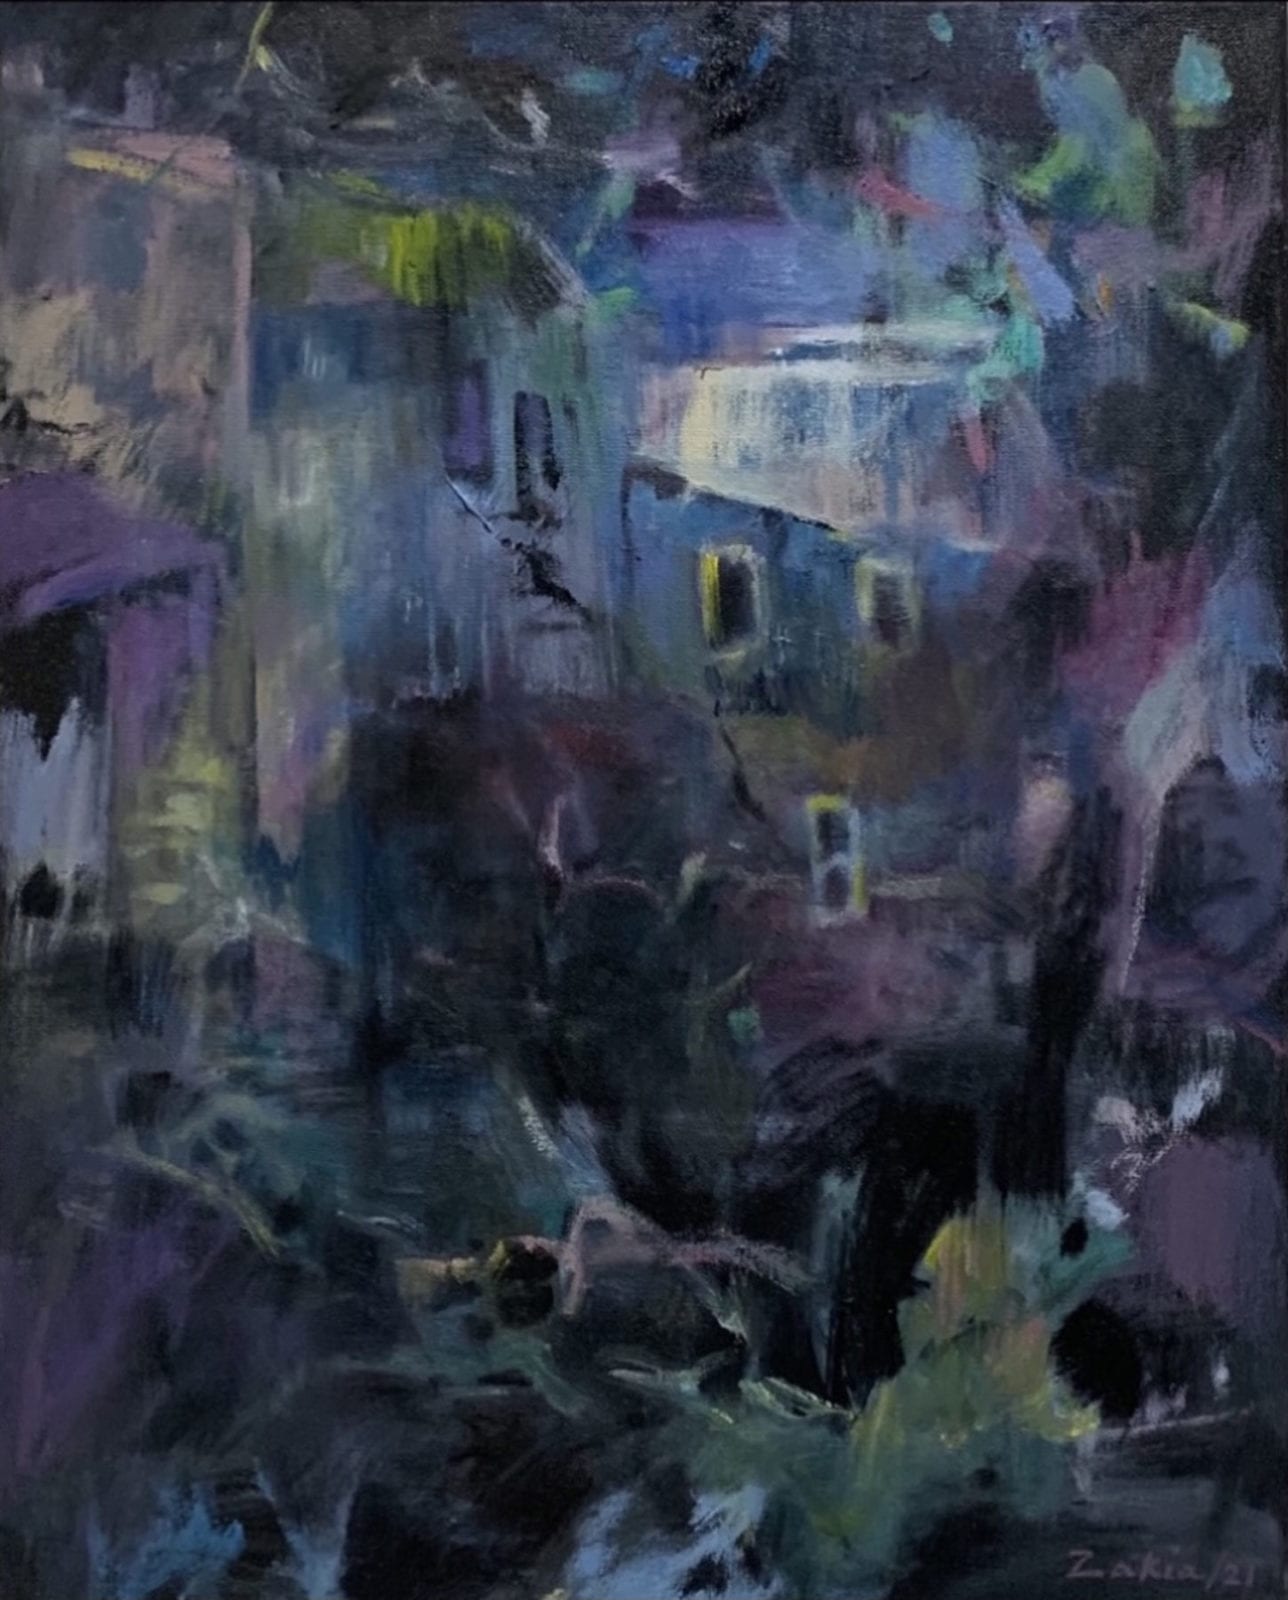 Zakia Ahmed, A Quiet Night, oil on canvas, 16 x 20